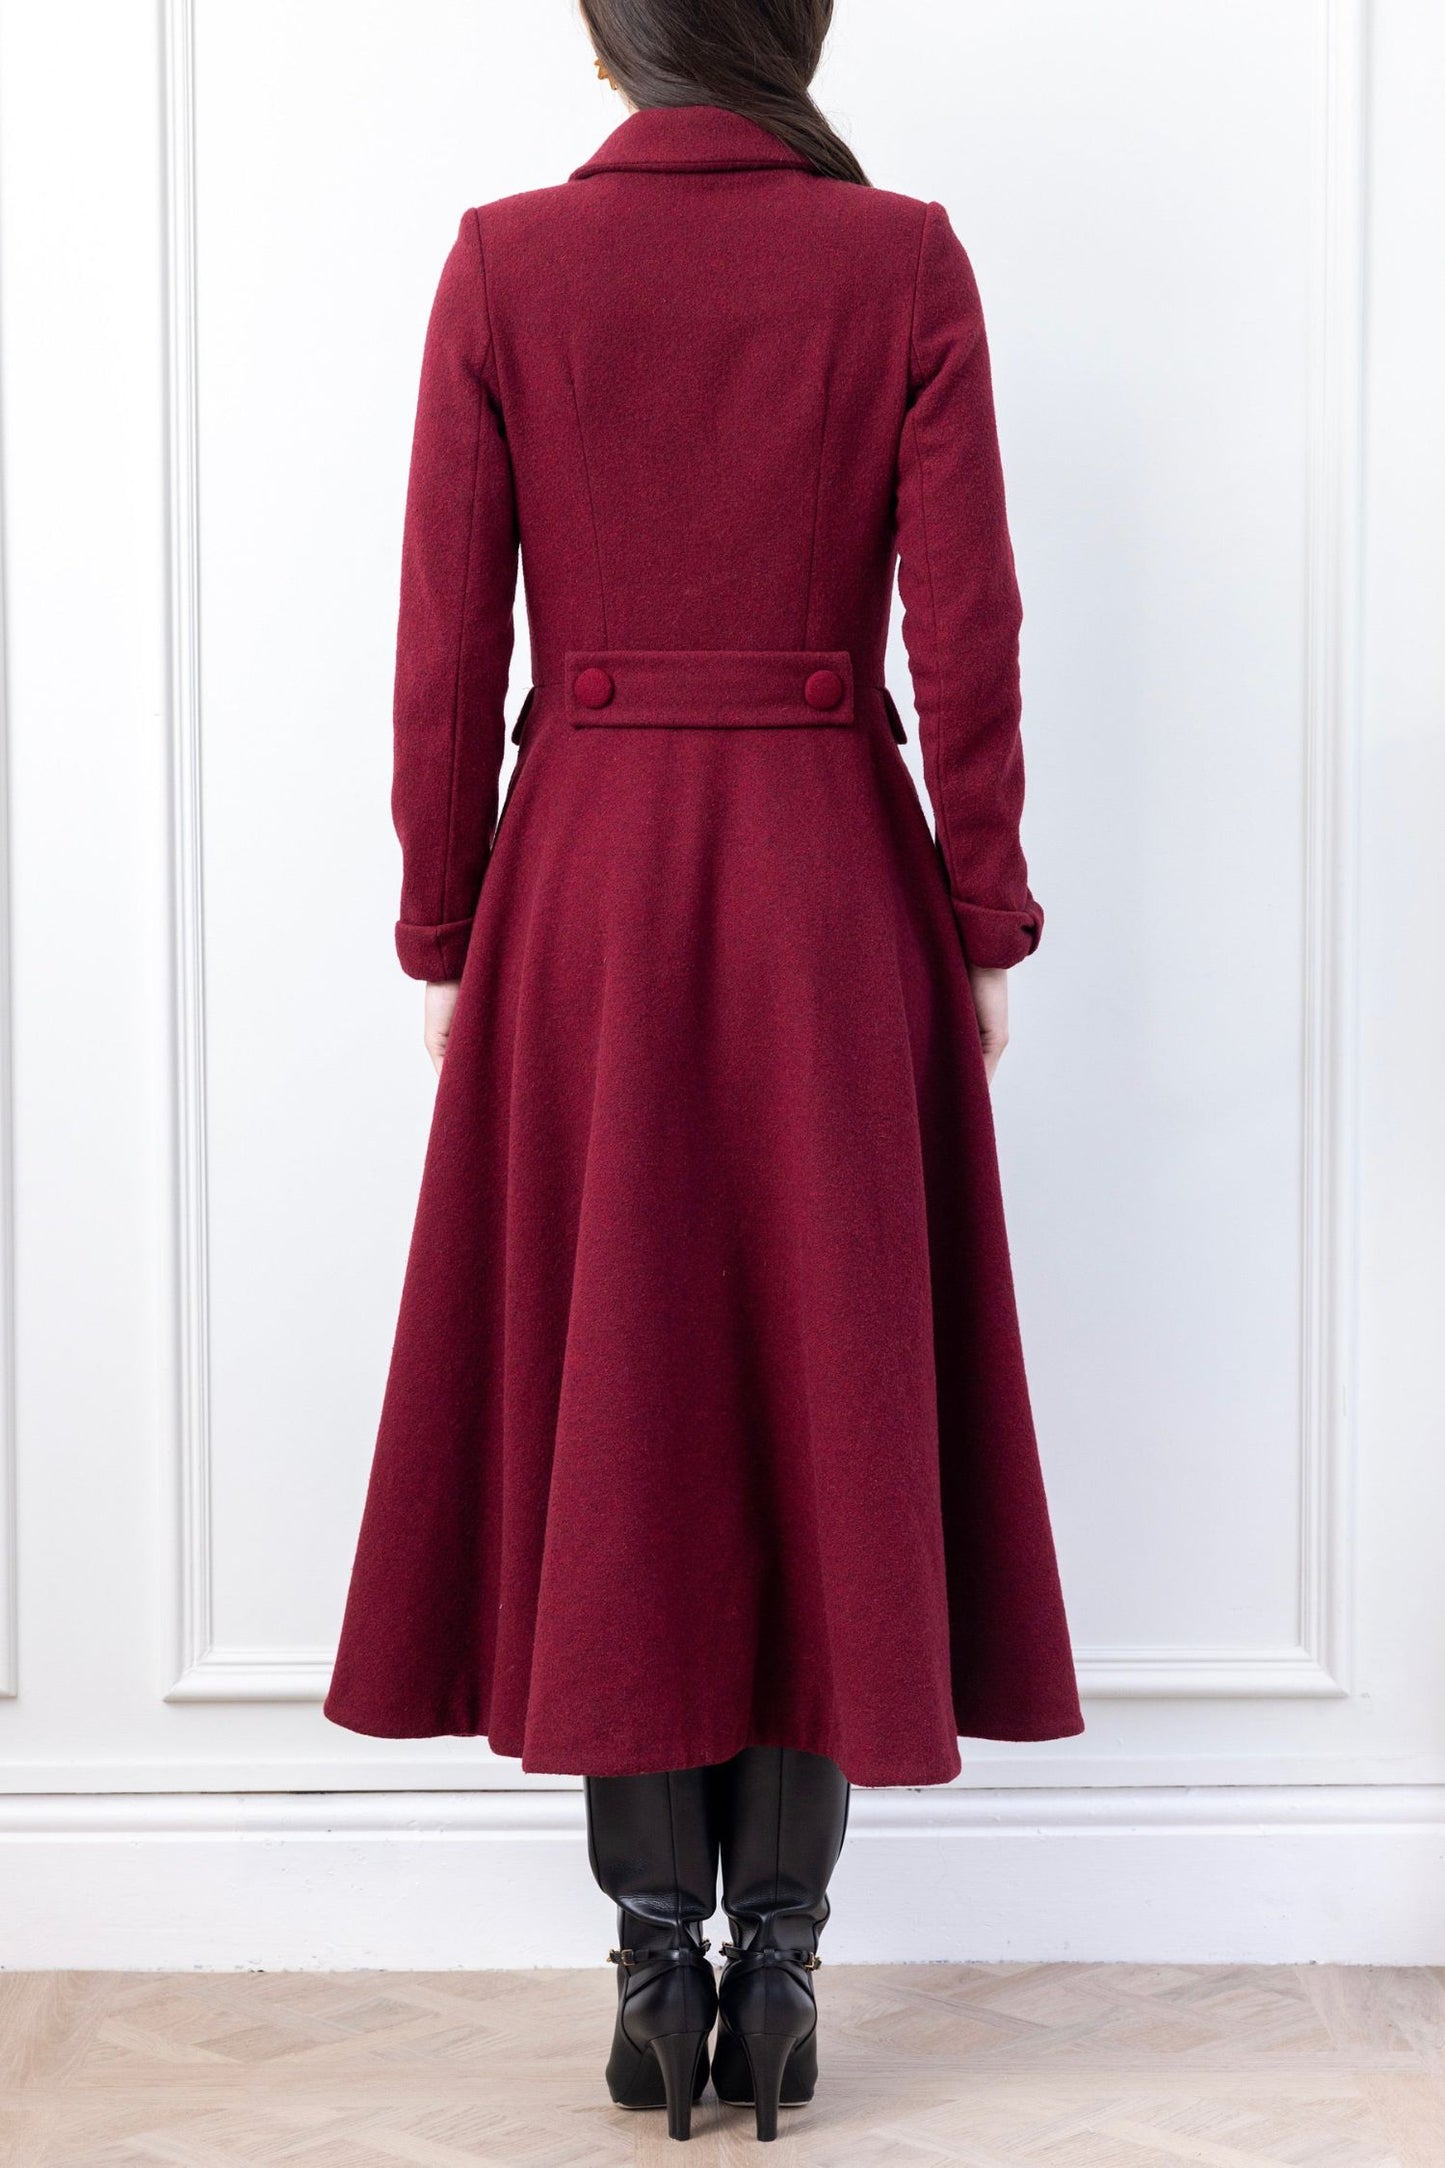 Button front midi burgundy winter wool coat 5178